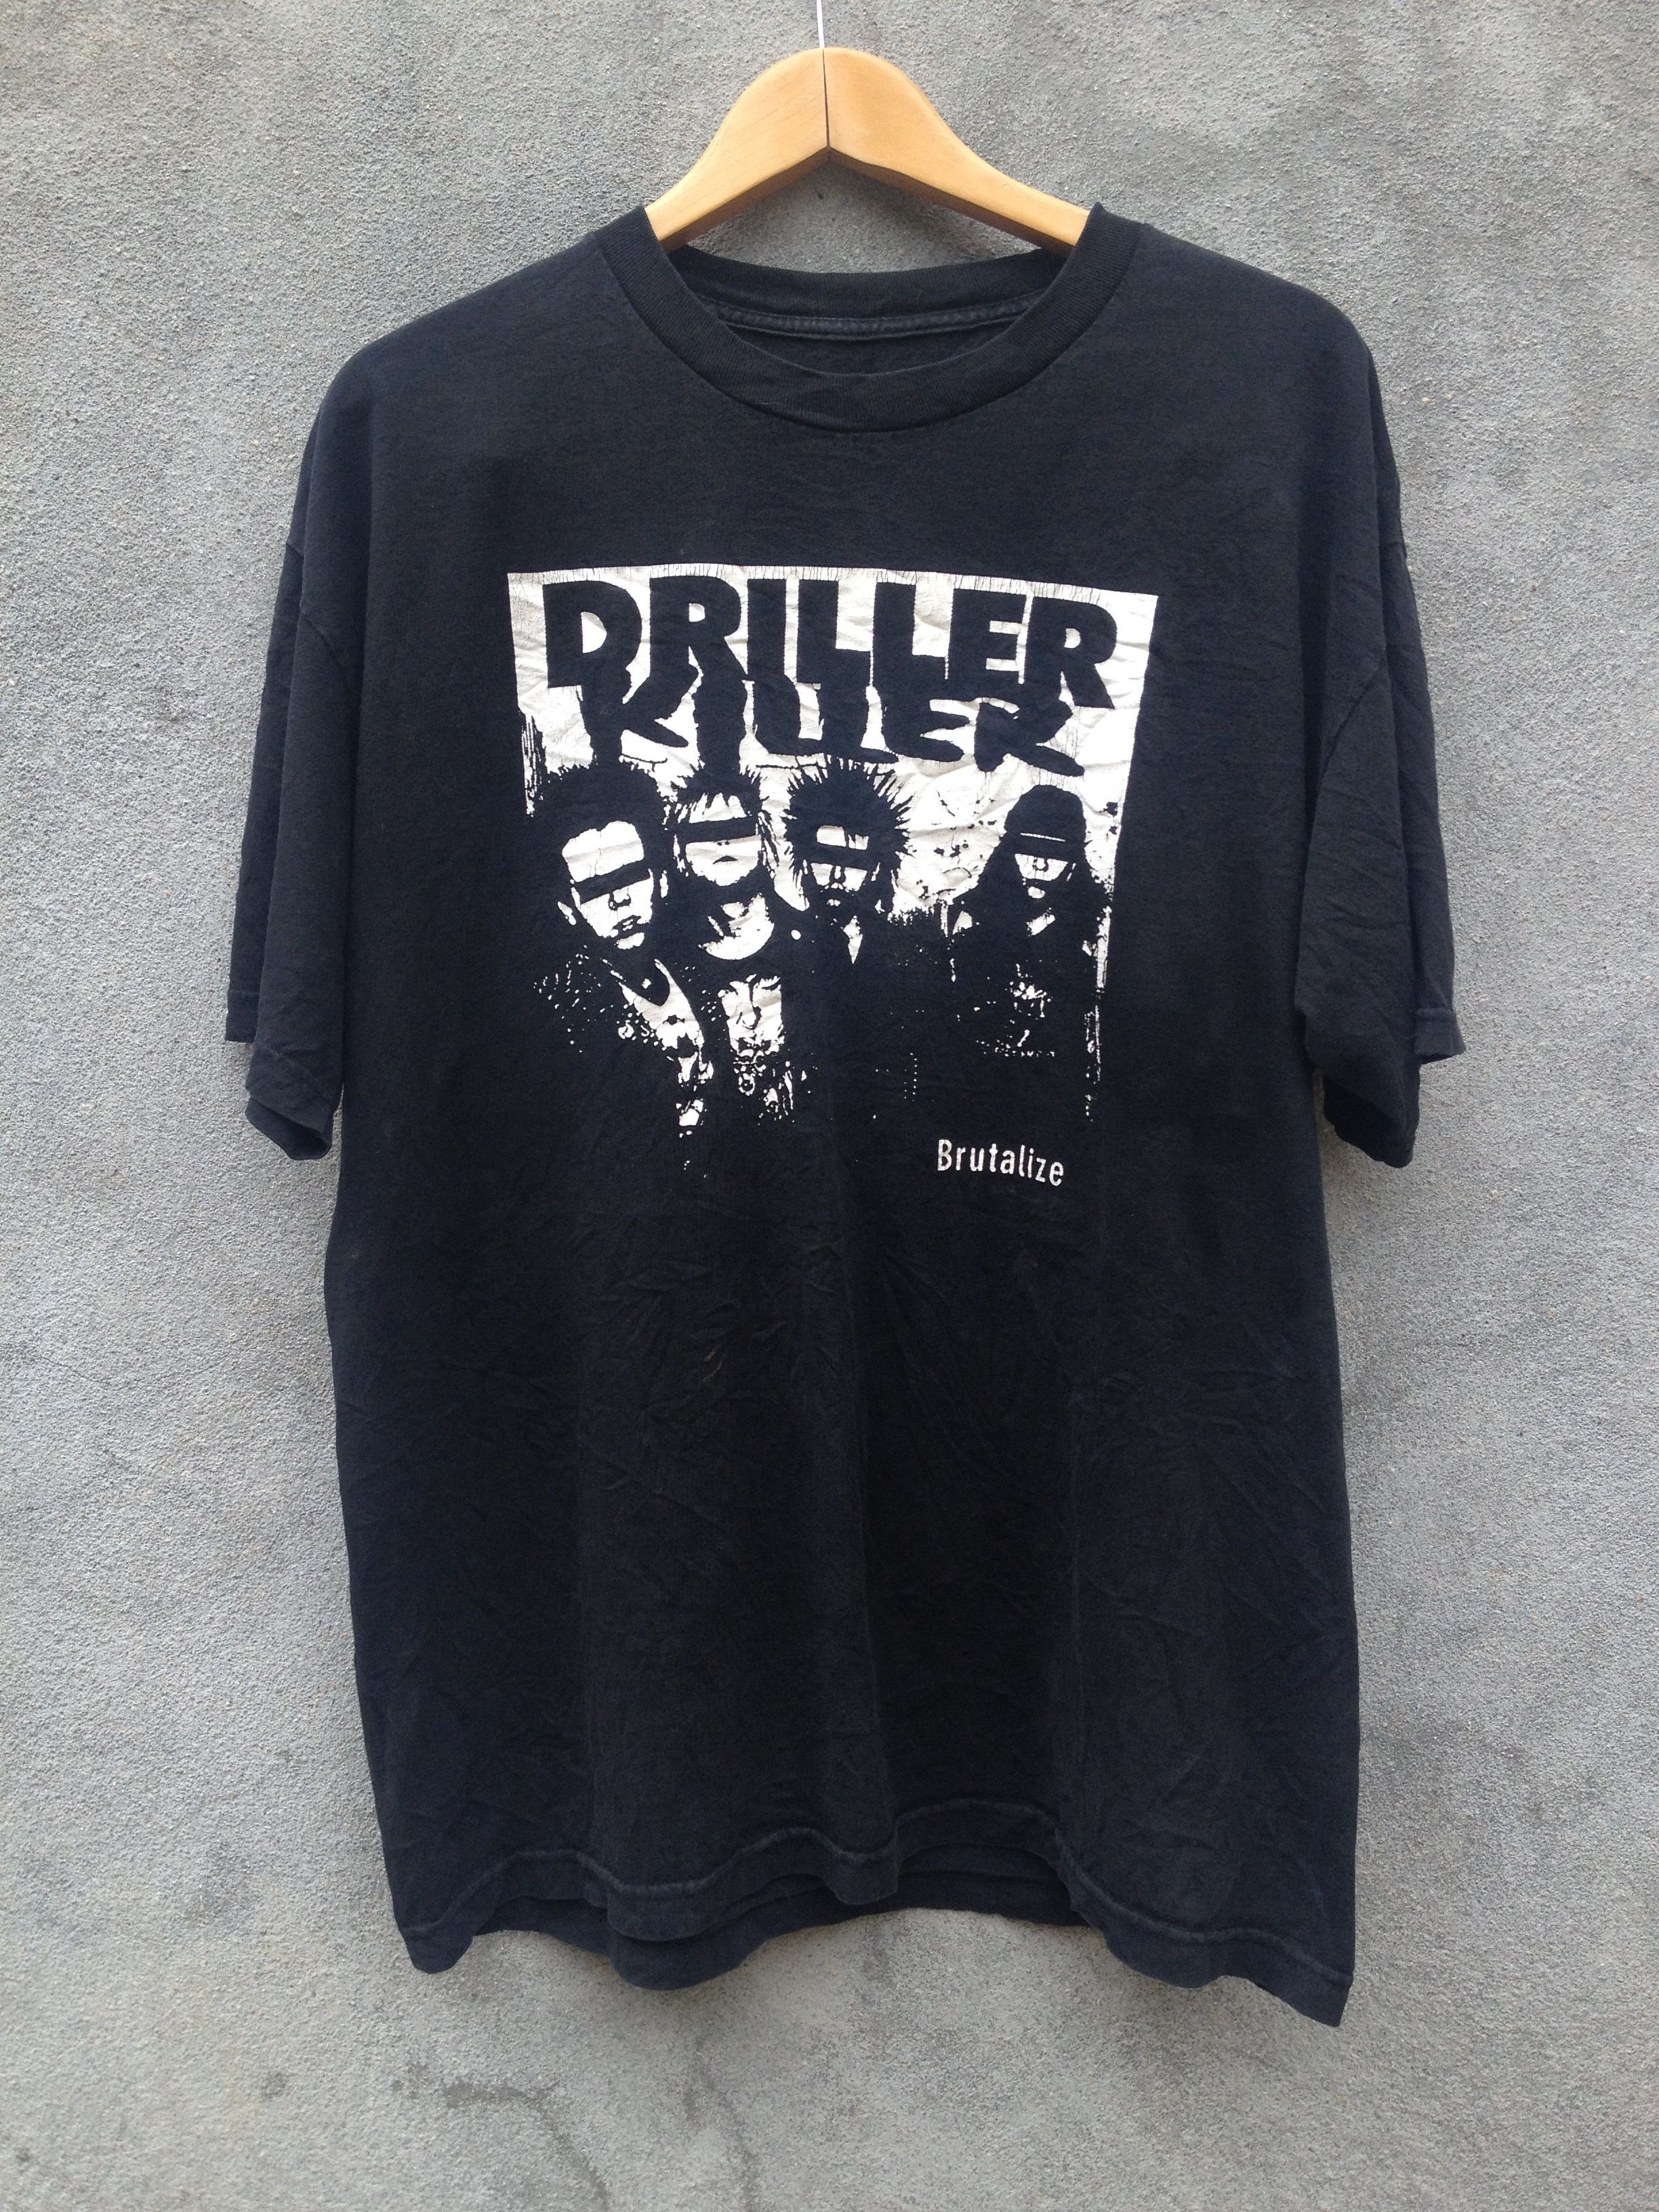 Pre-owned Band Tees X Vintage Driller Killer Brutalize T-shirt Tee Cw21 In Black